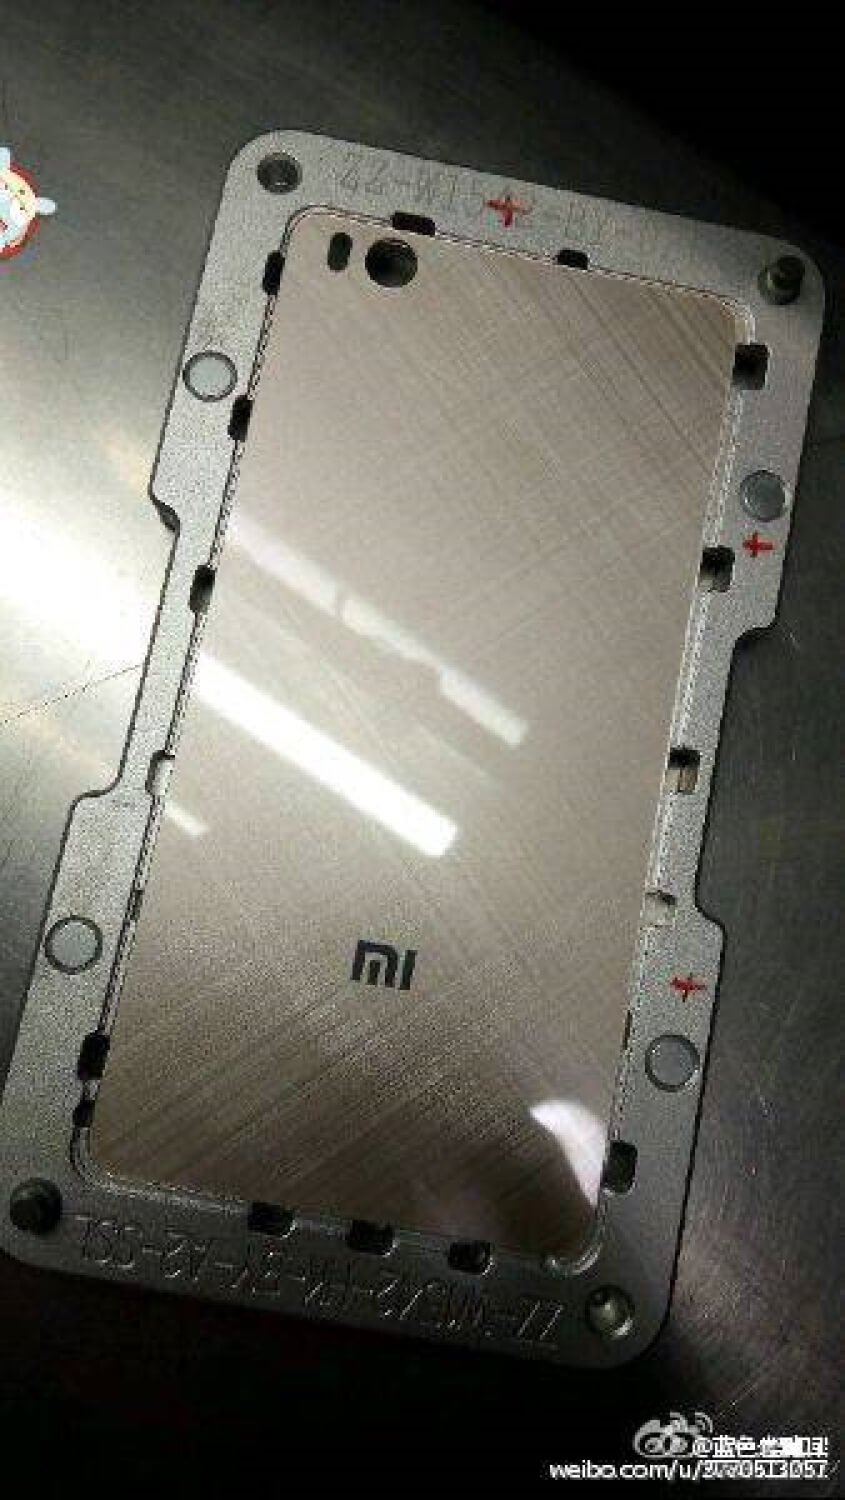 Alleged-Xiaomi-Mi-5-back-plate (1)